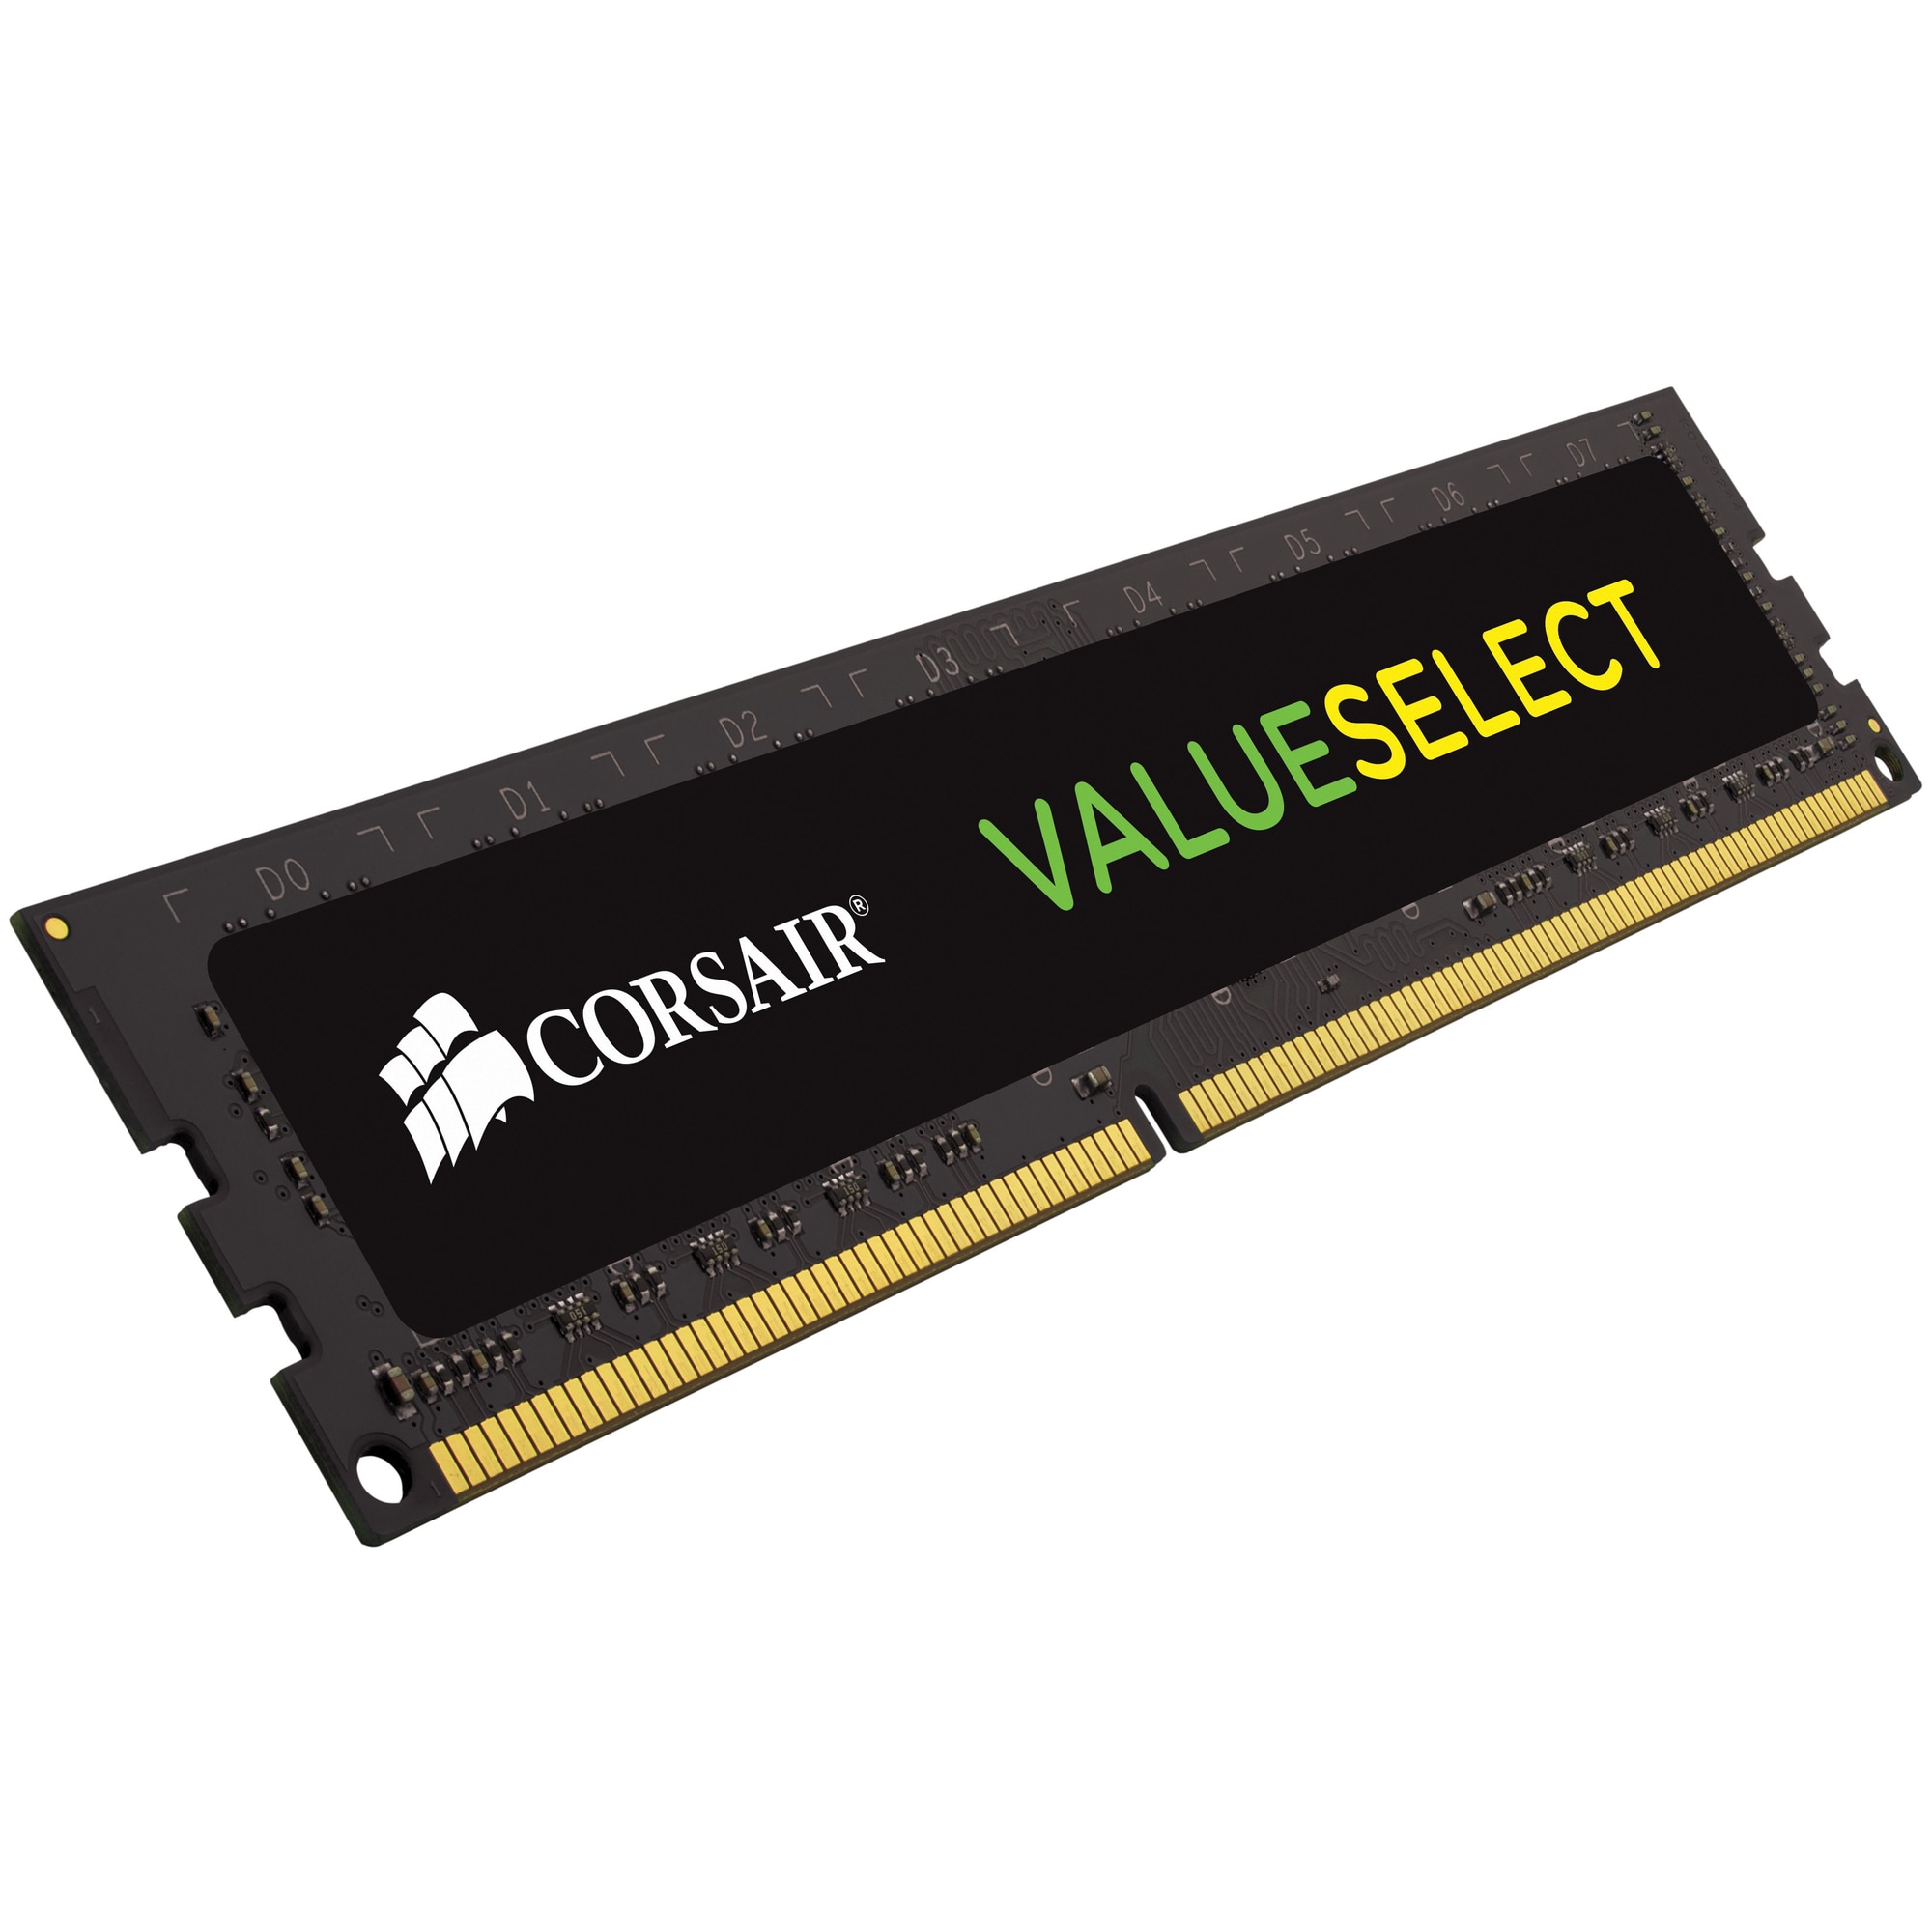 Corsair DDR3 4 GB keskusmuisti - Gigantti verkkokauppa